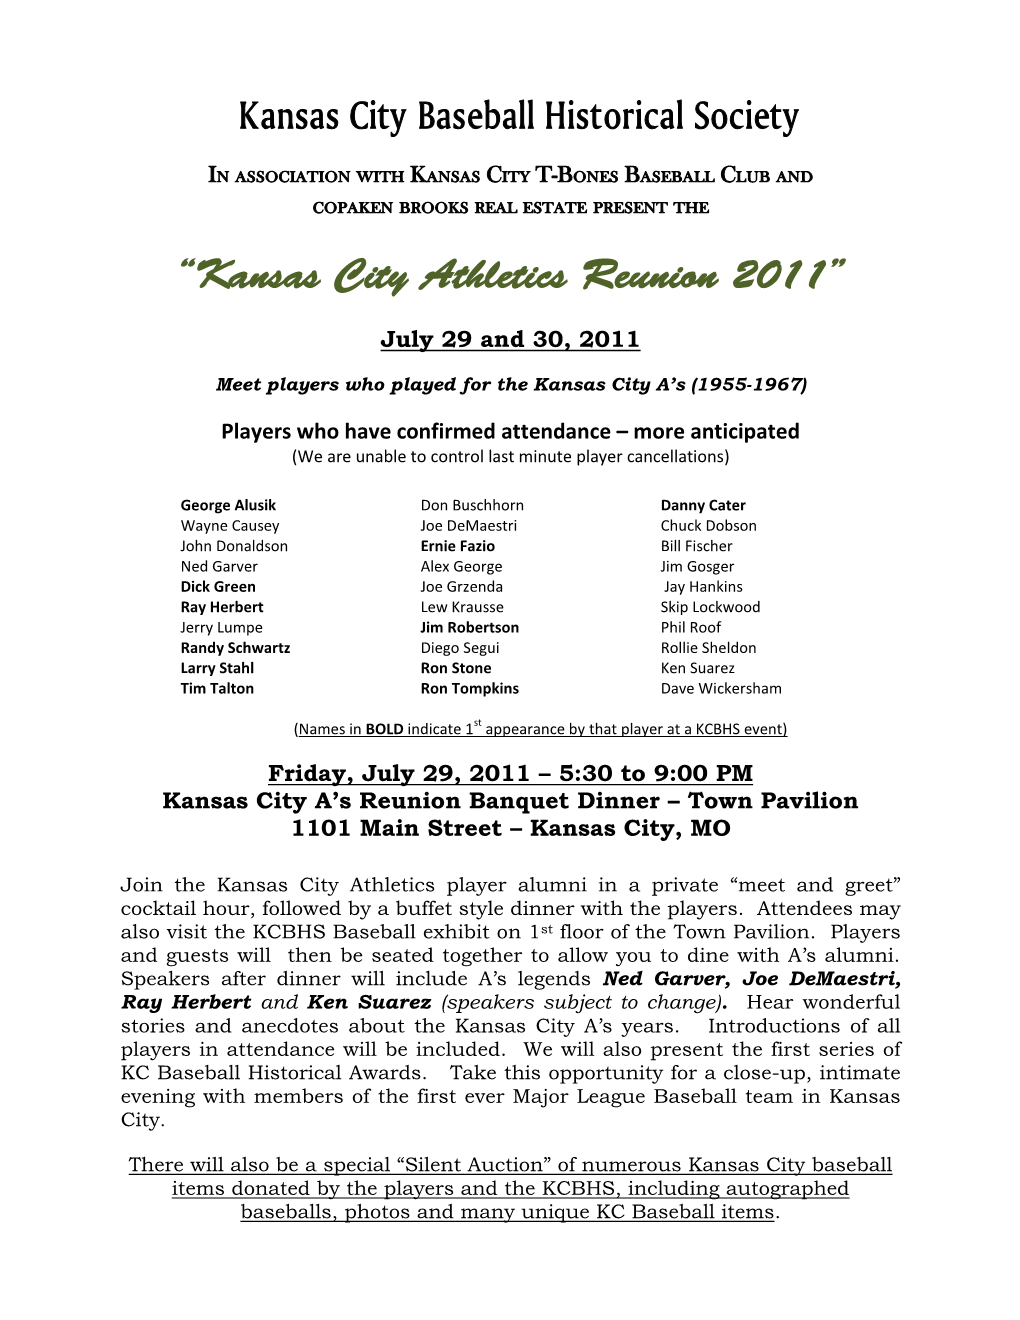 “Kansas City Athletics Reunion 2011”